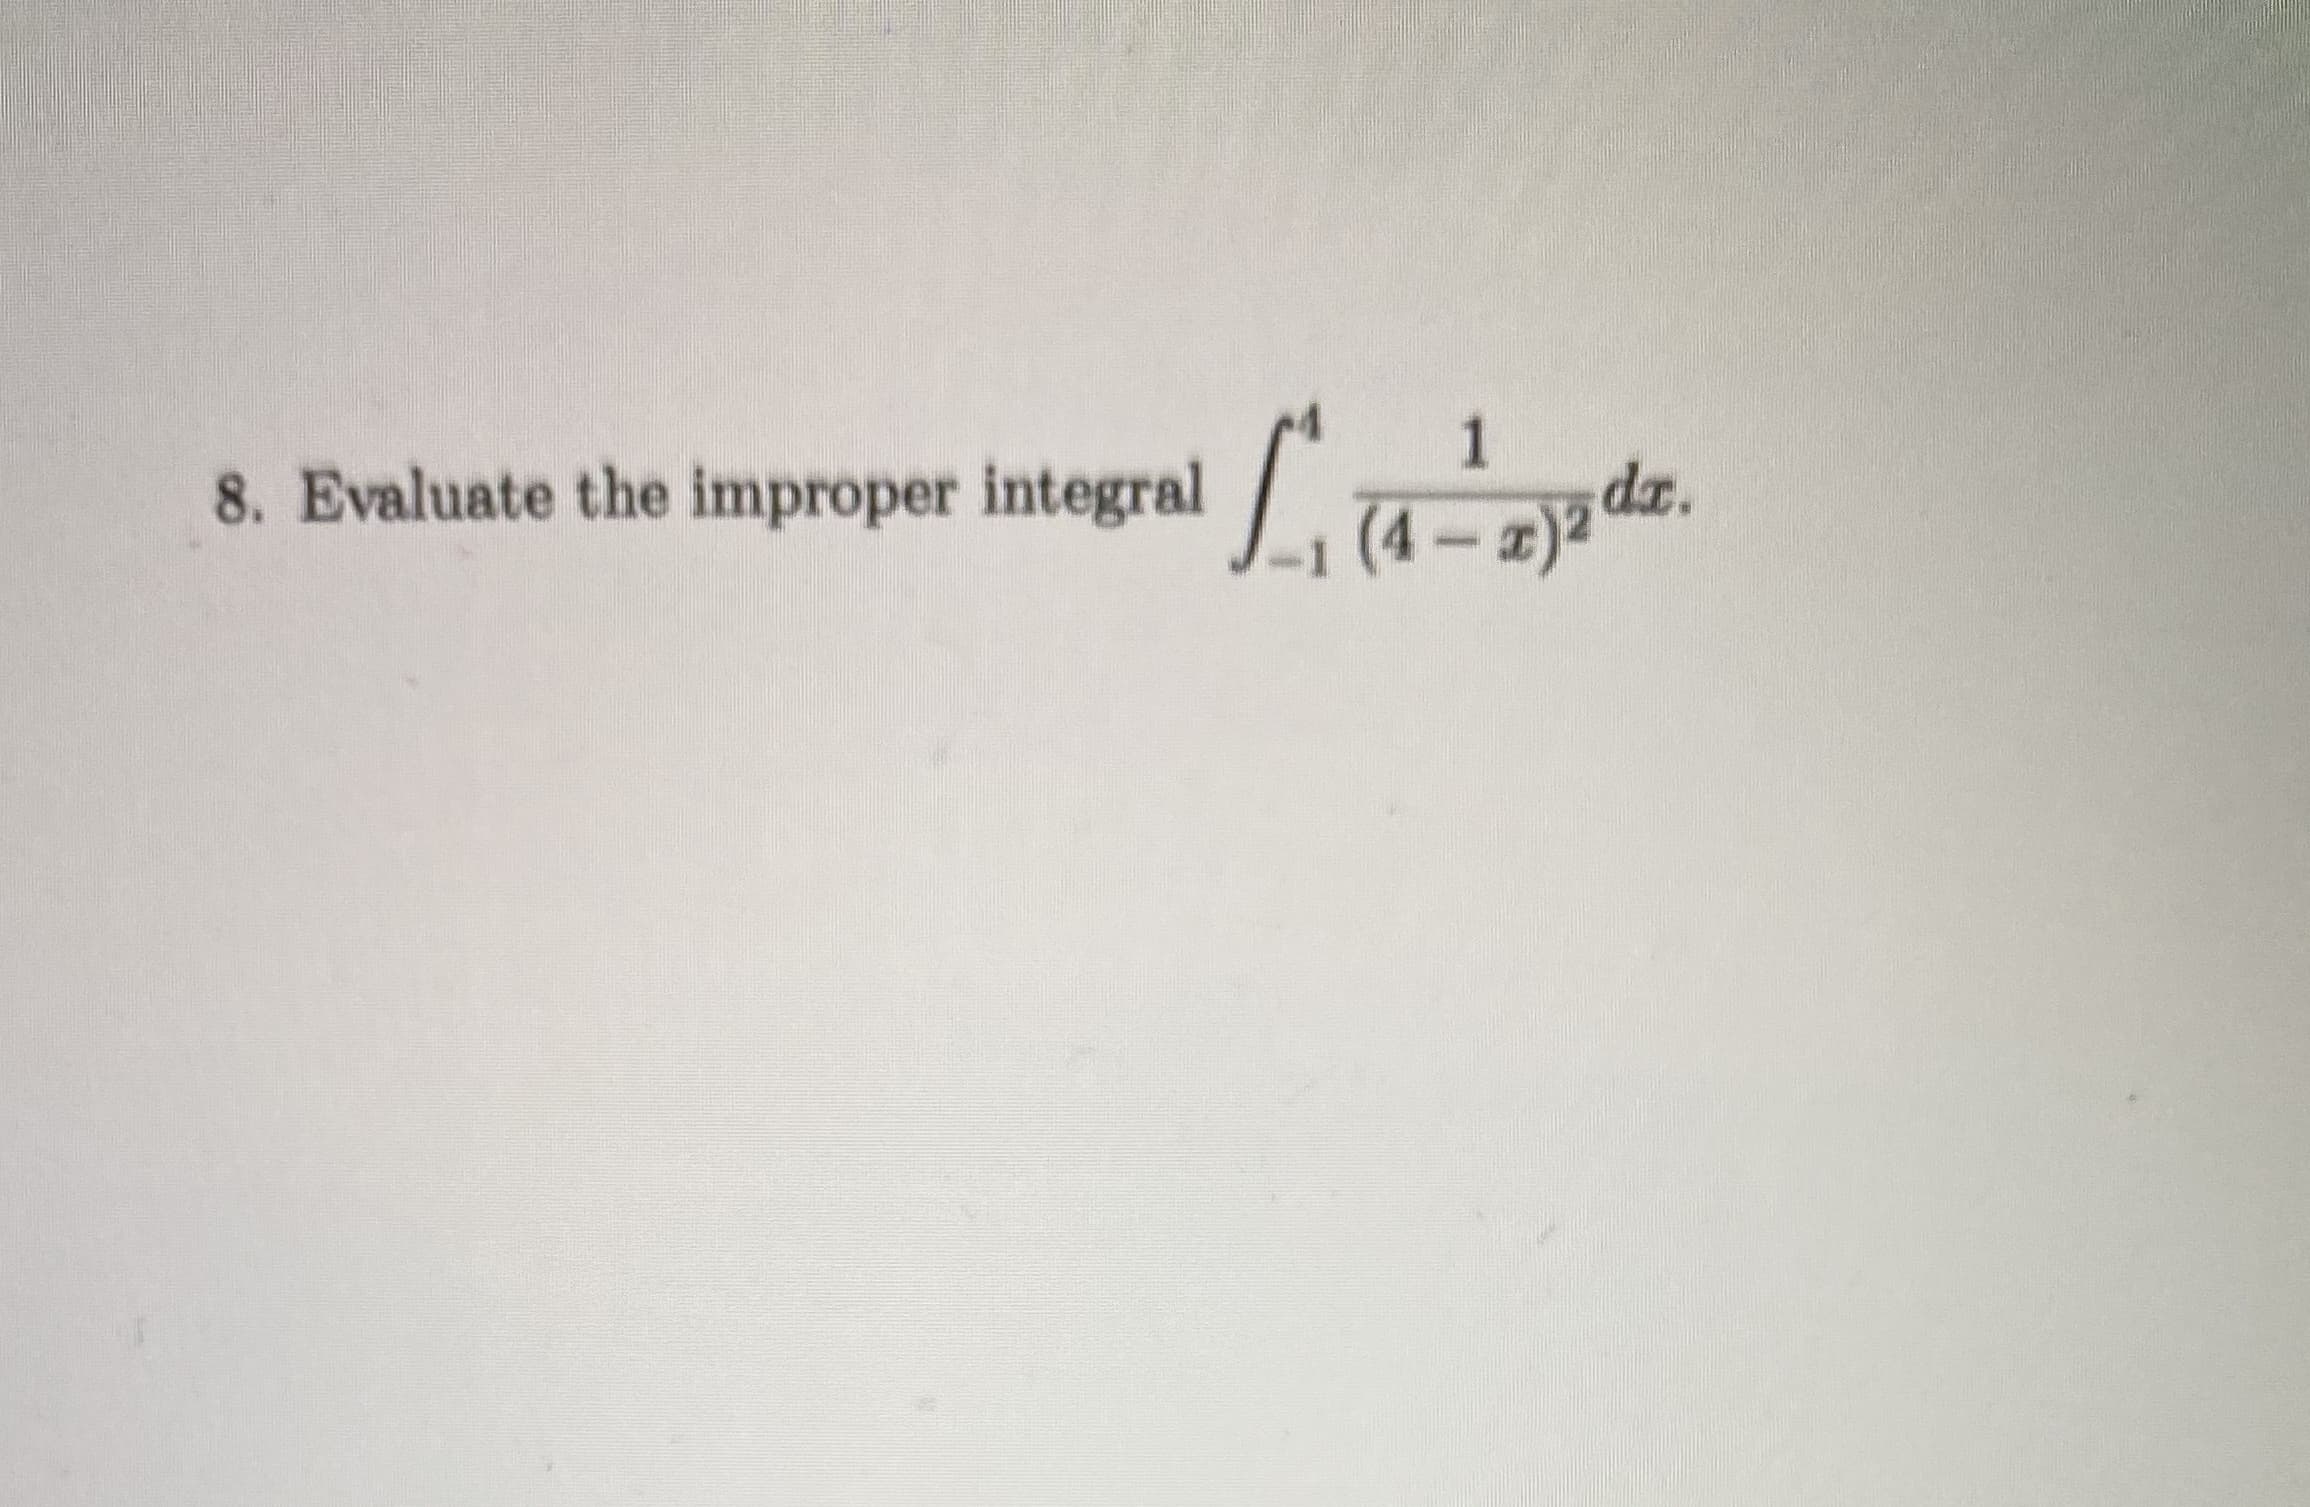 Evaluate the improper integral .a-2 dz.
1
dr.
(4-a)2
